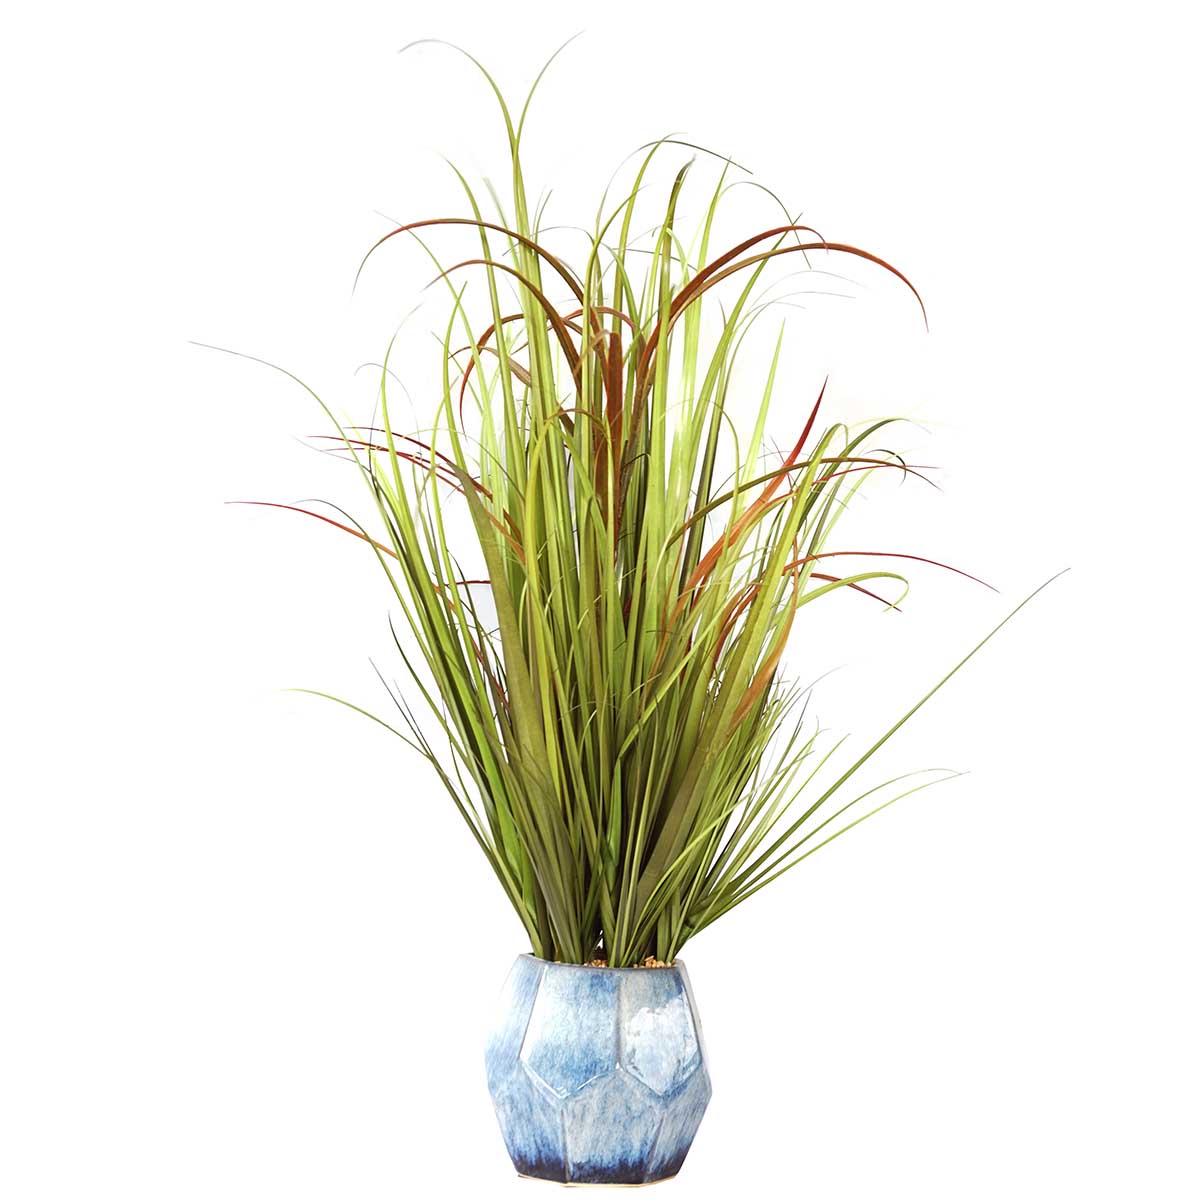 Vha102462 Plastic Grass & Onion Grass In Ceramic Pot